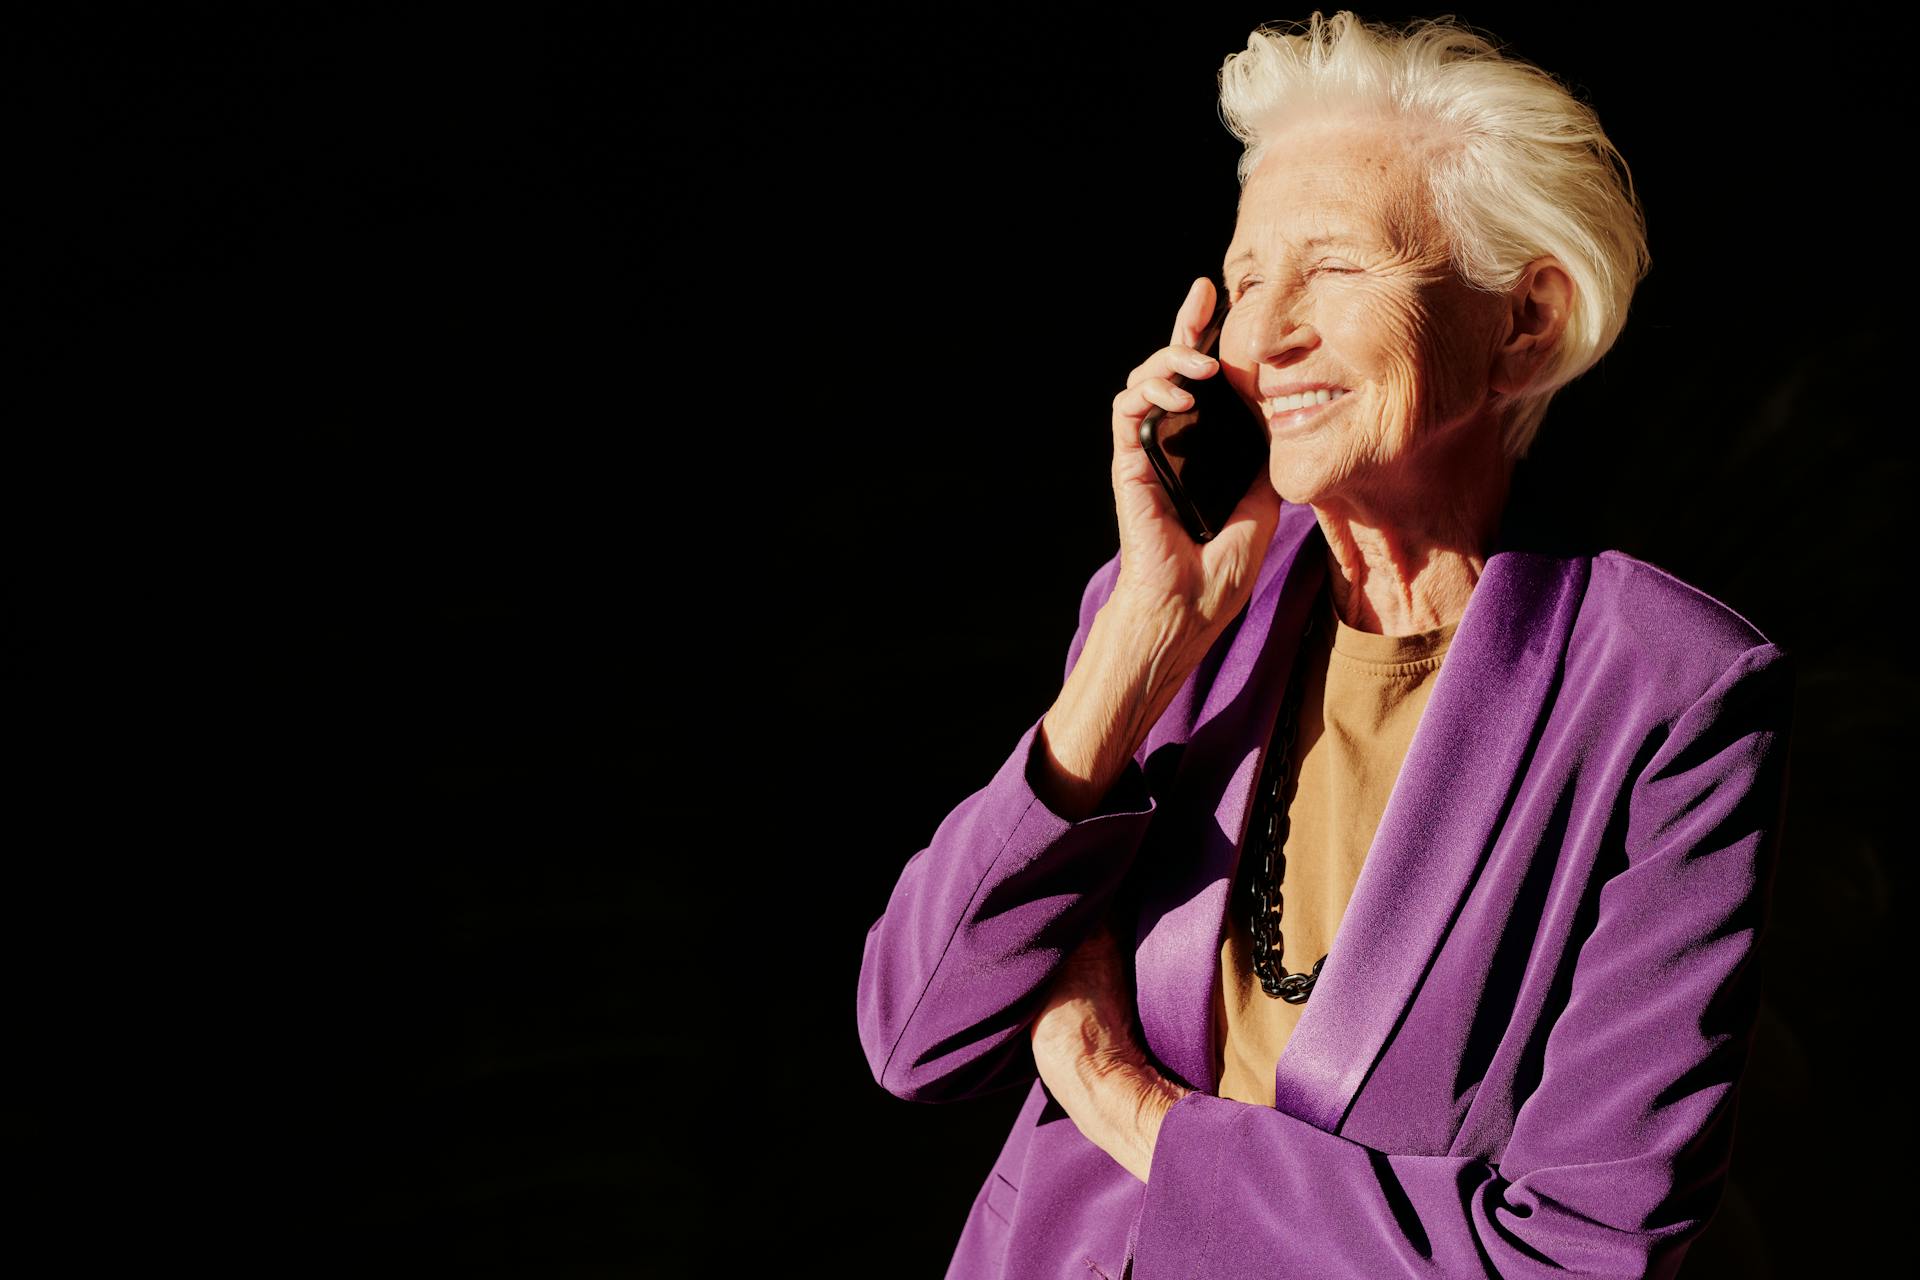 An elderly woman speaking on the phone | Source: Pexels